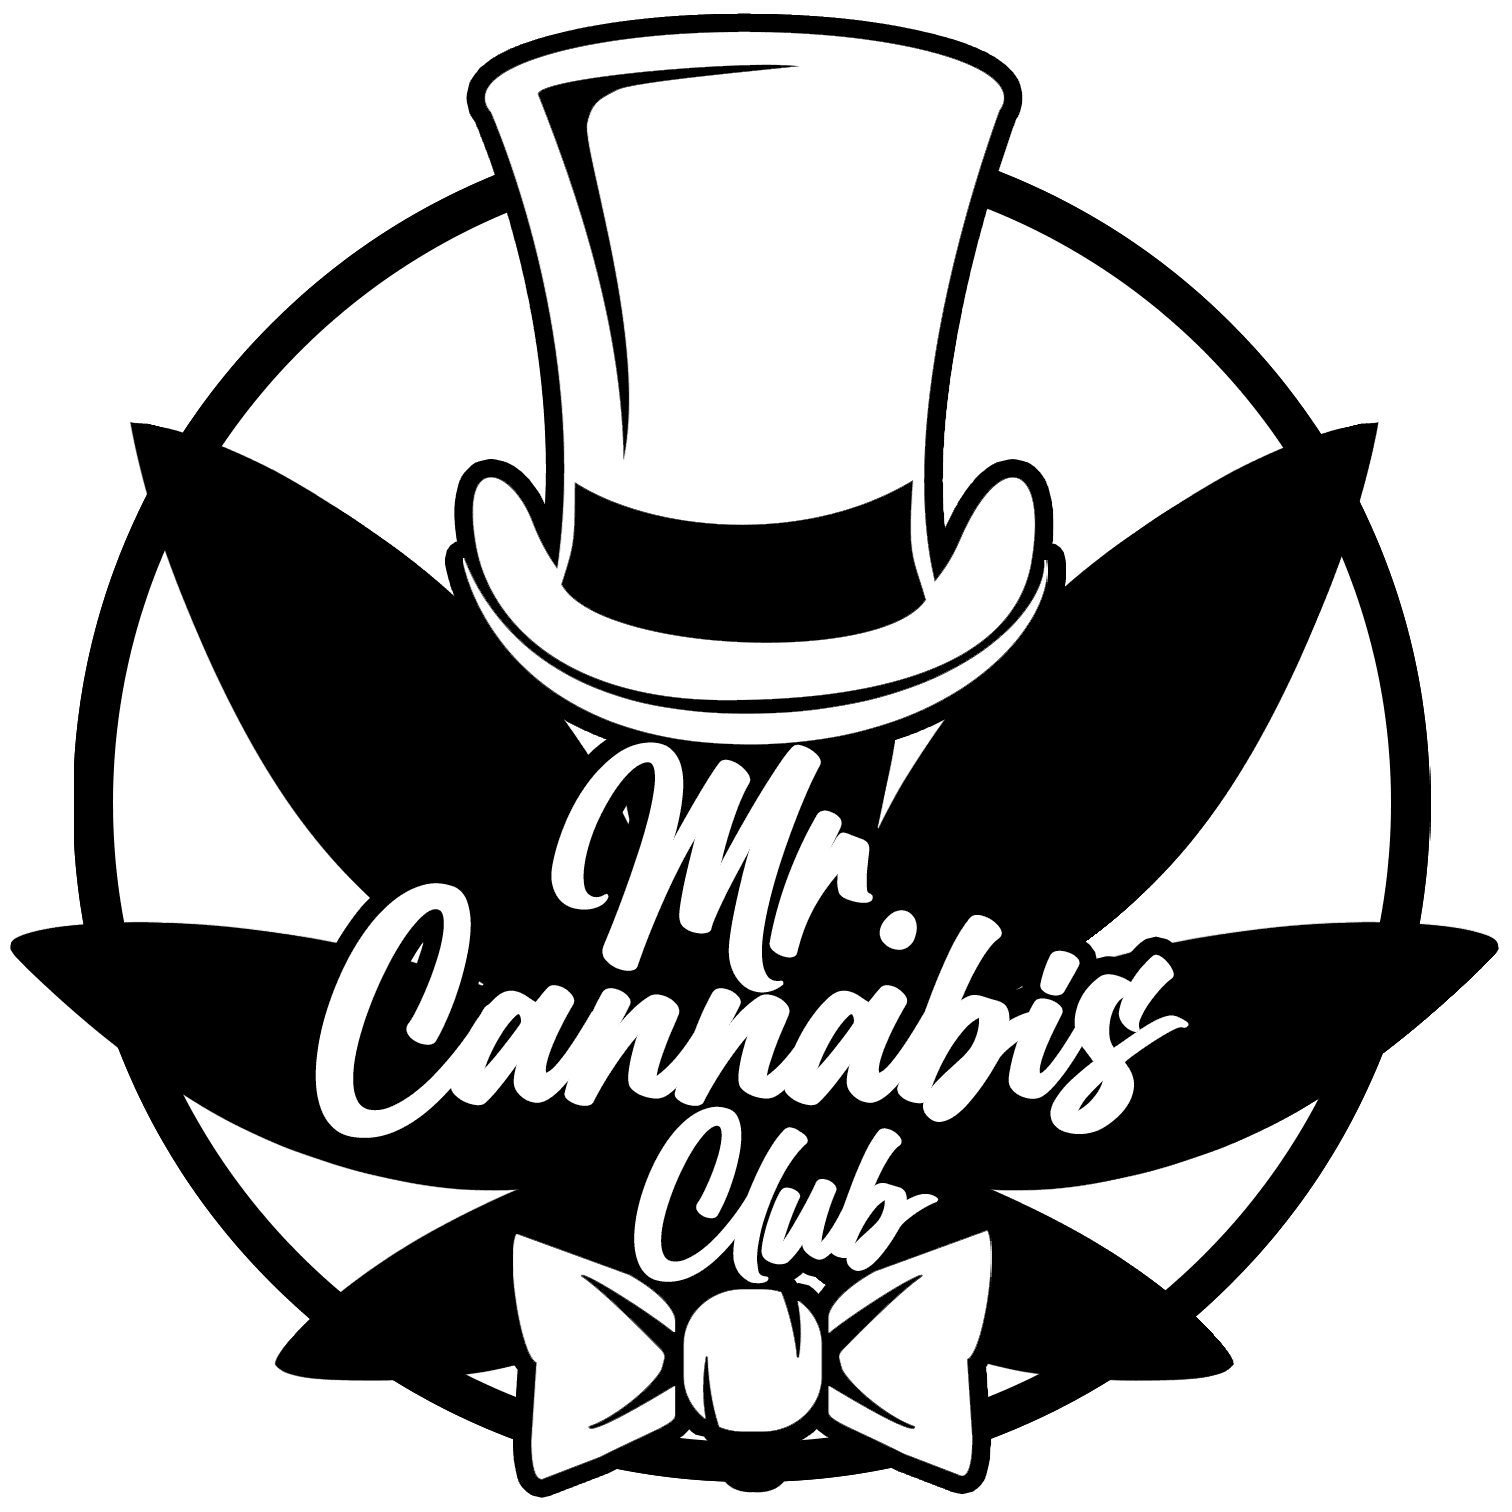 Mr. Cannabis Club